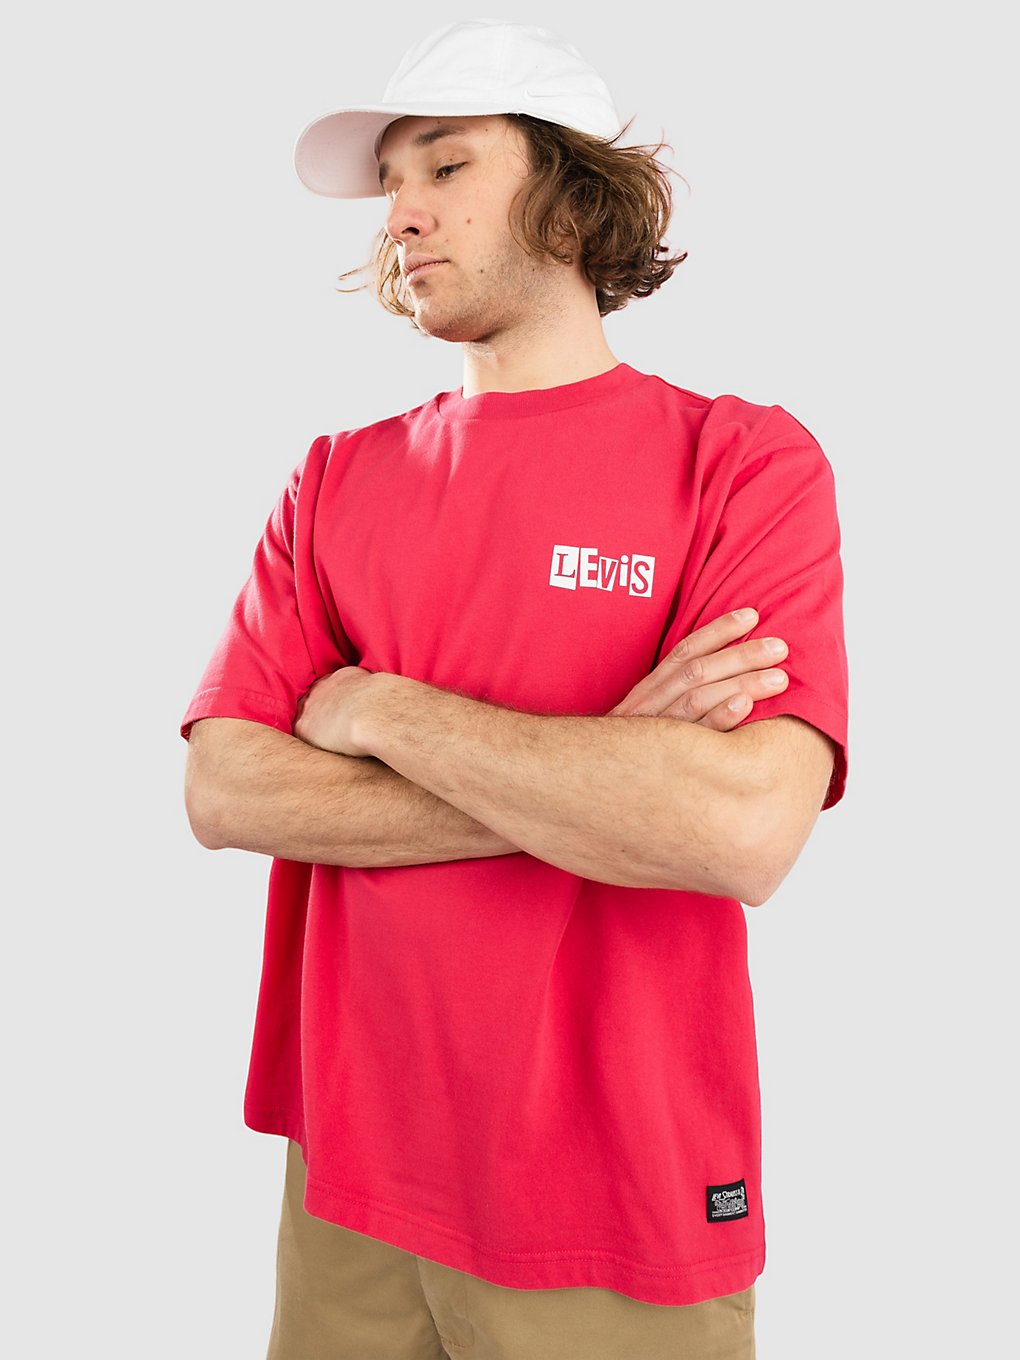 Levi's Skate Graphic Box T-Shirt lsc raspberry core red kaufen